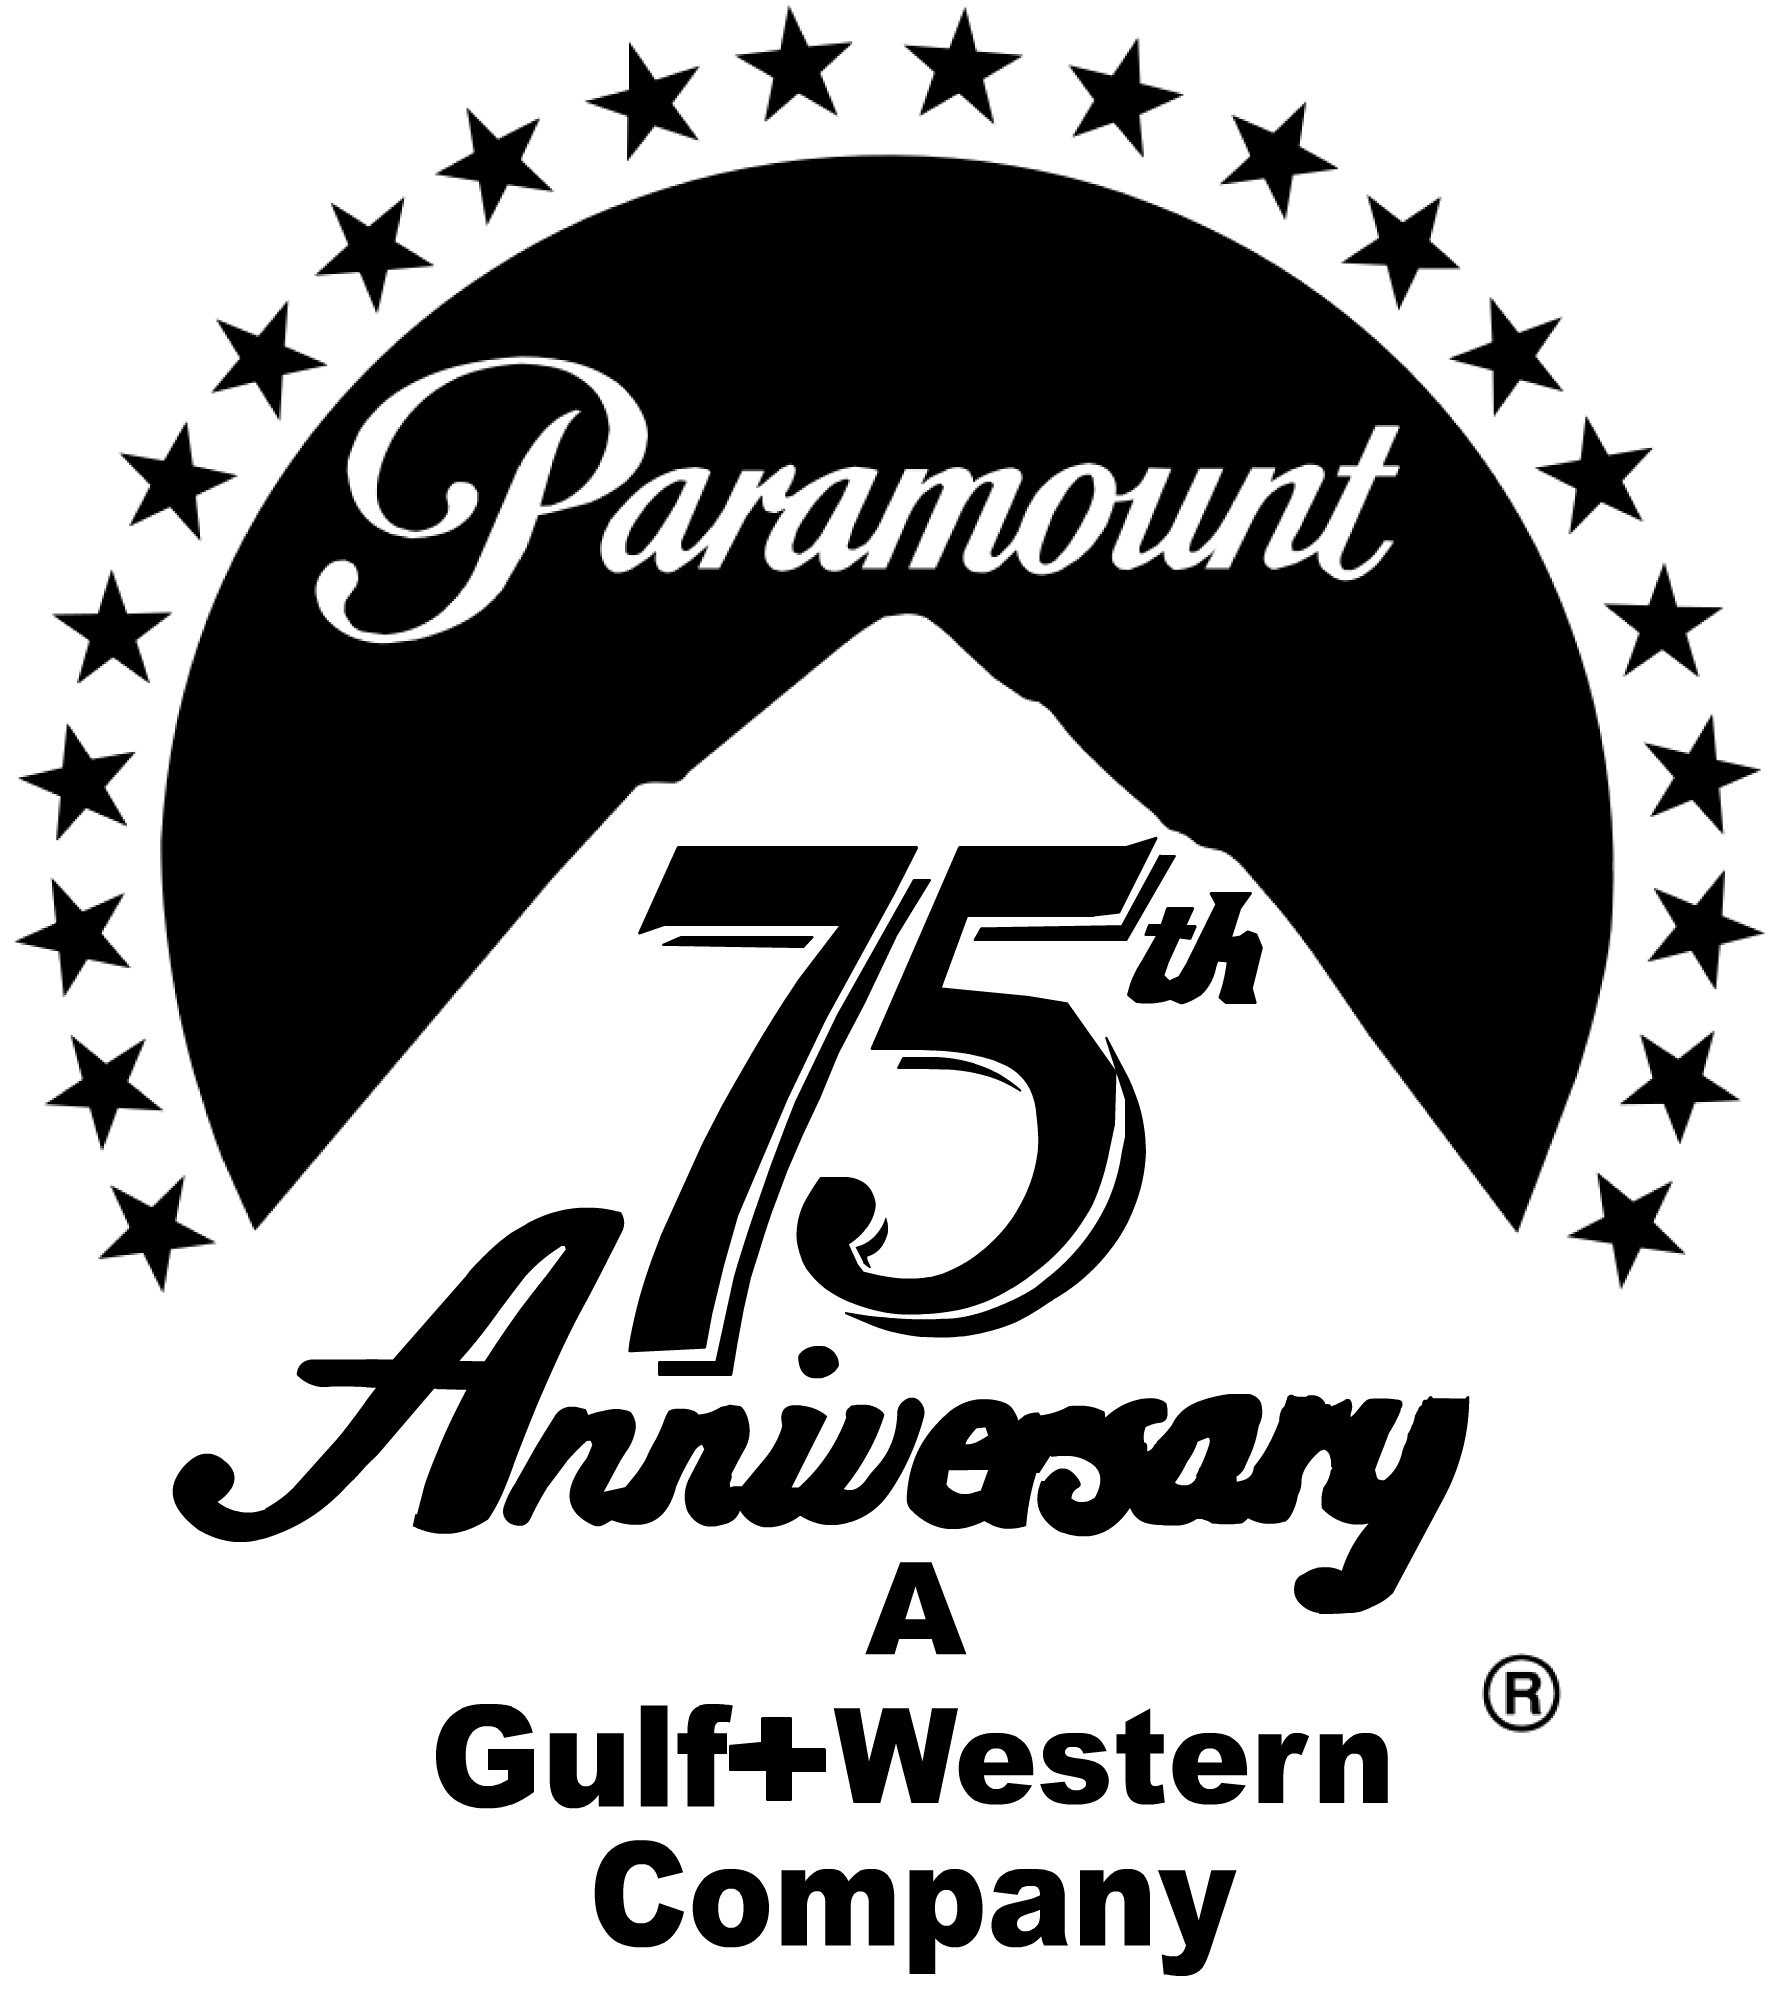 Paramount Company Logo - Image - Paramount Pictures 75th Anniversary.png | Logopedia | FANDOM ...